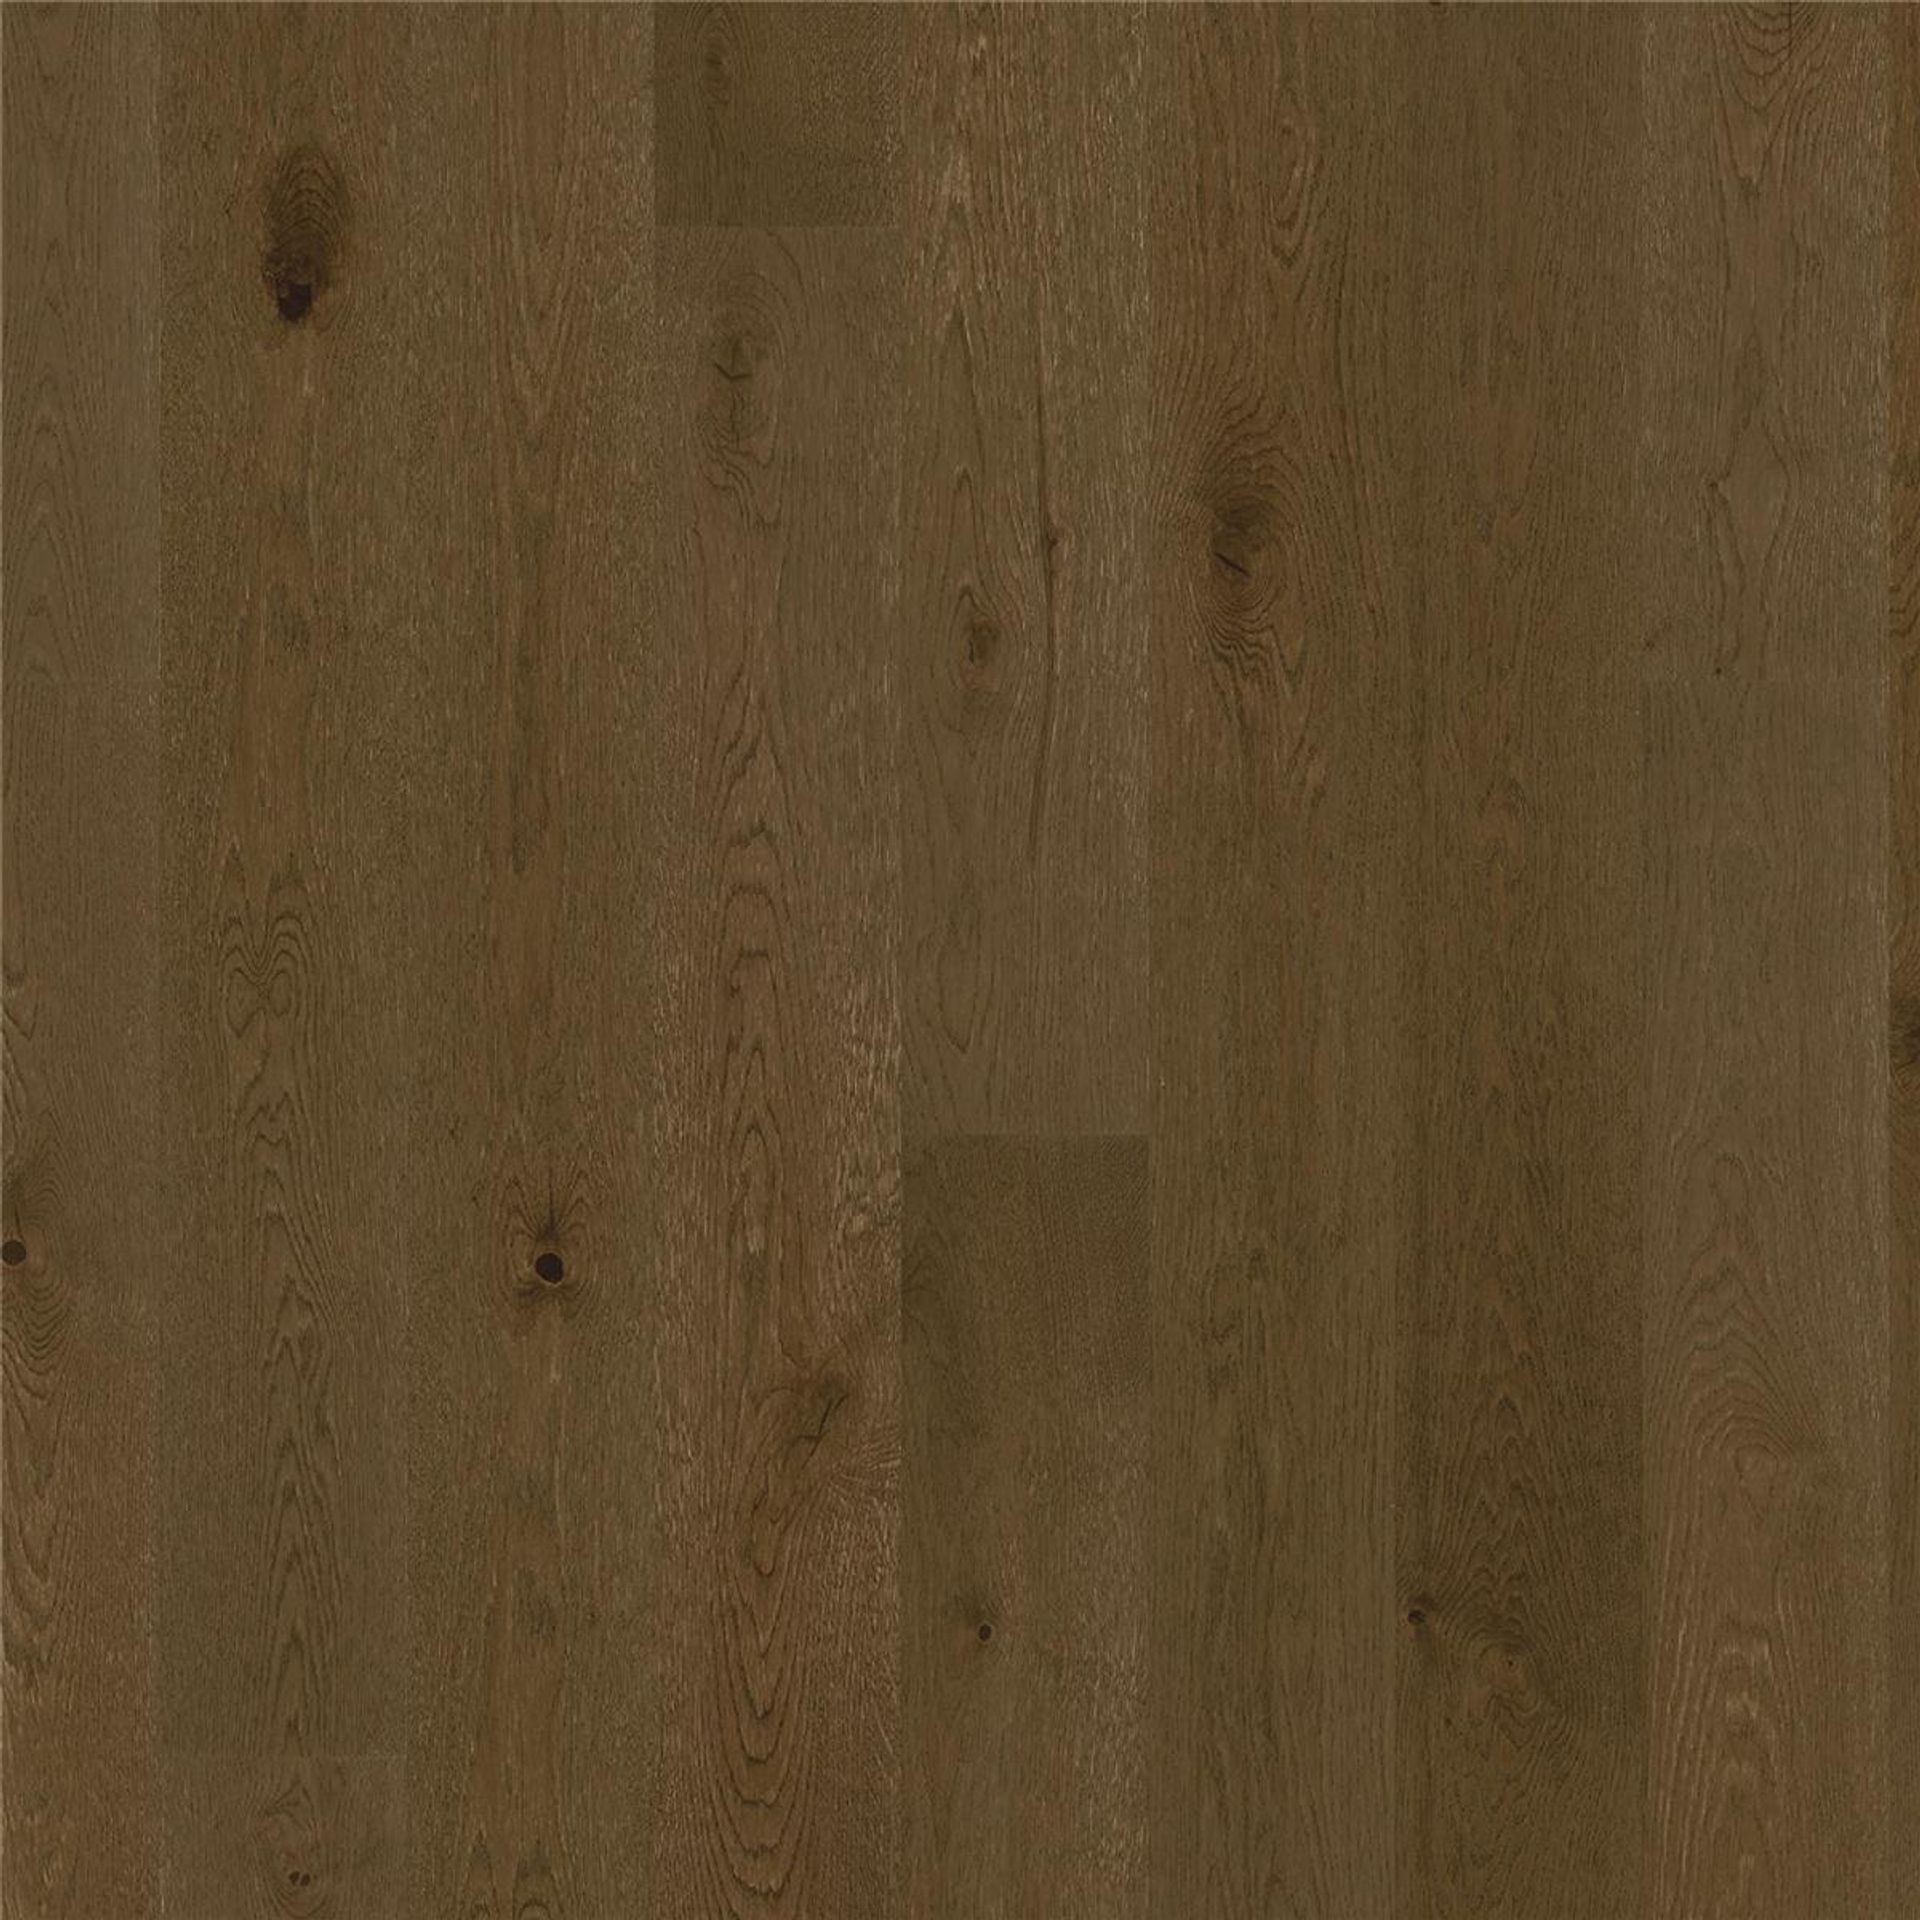 Holzboden Eiche Italian brown 1 Stab MADRID-TB15 Planke 162 x 2000 mm